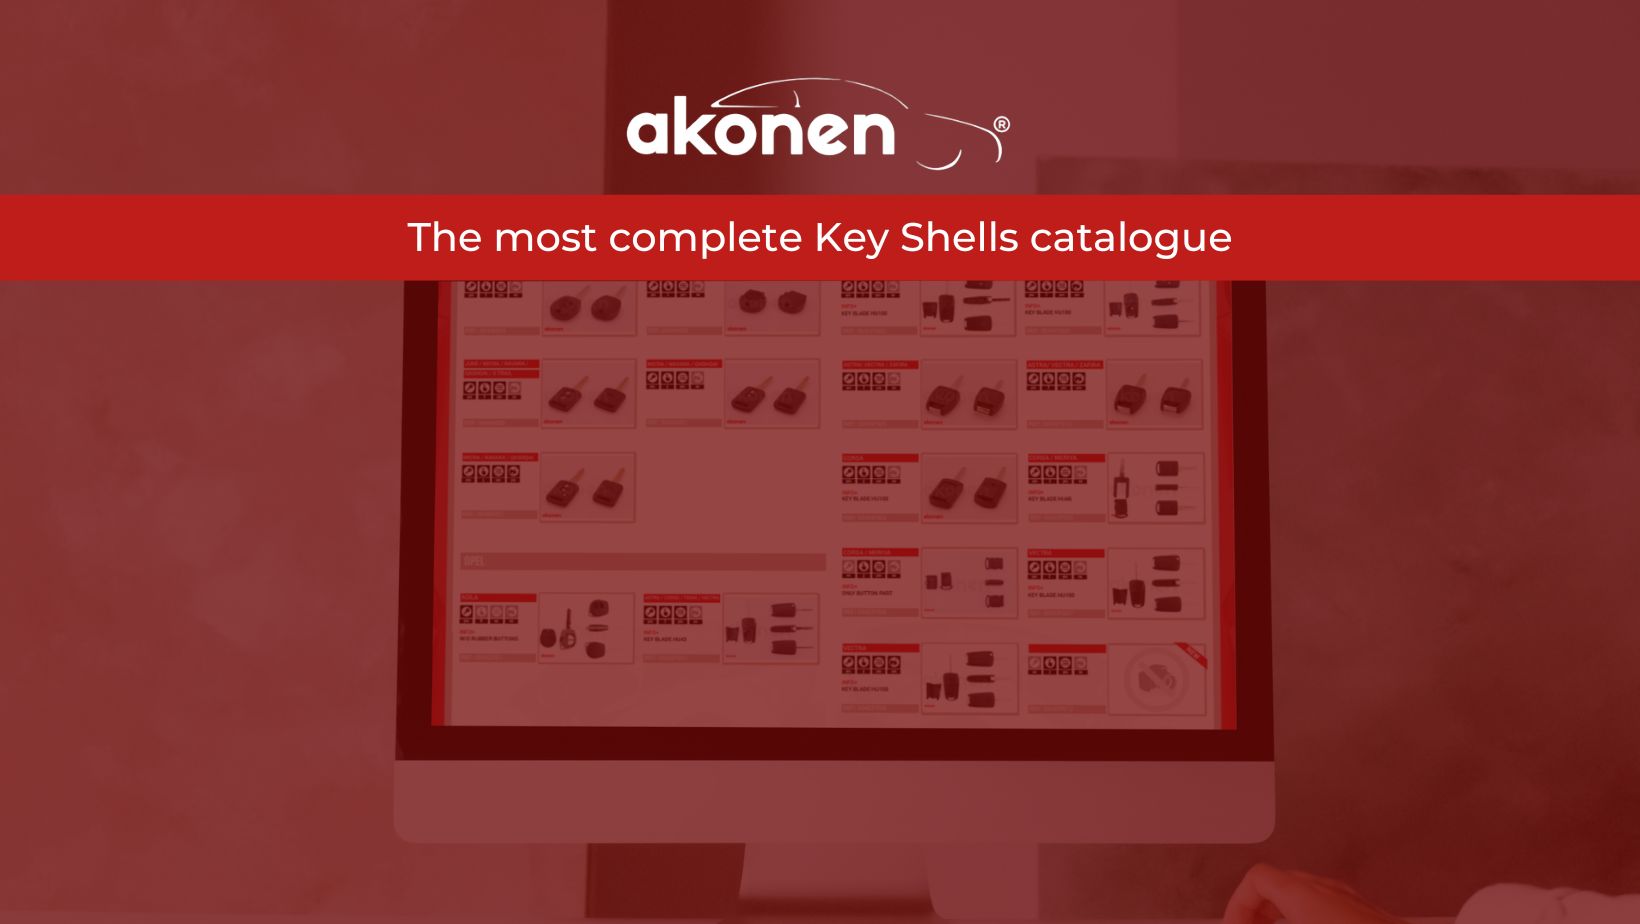 https://bcarparts.com/wp-content/uploads/2018/02/lanzamiento-akonen-key-shells.jpg